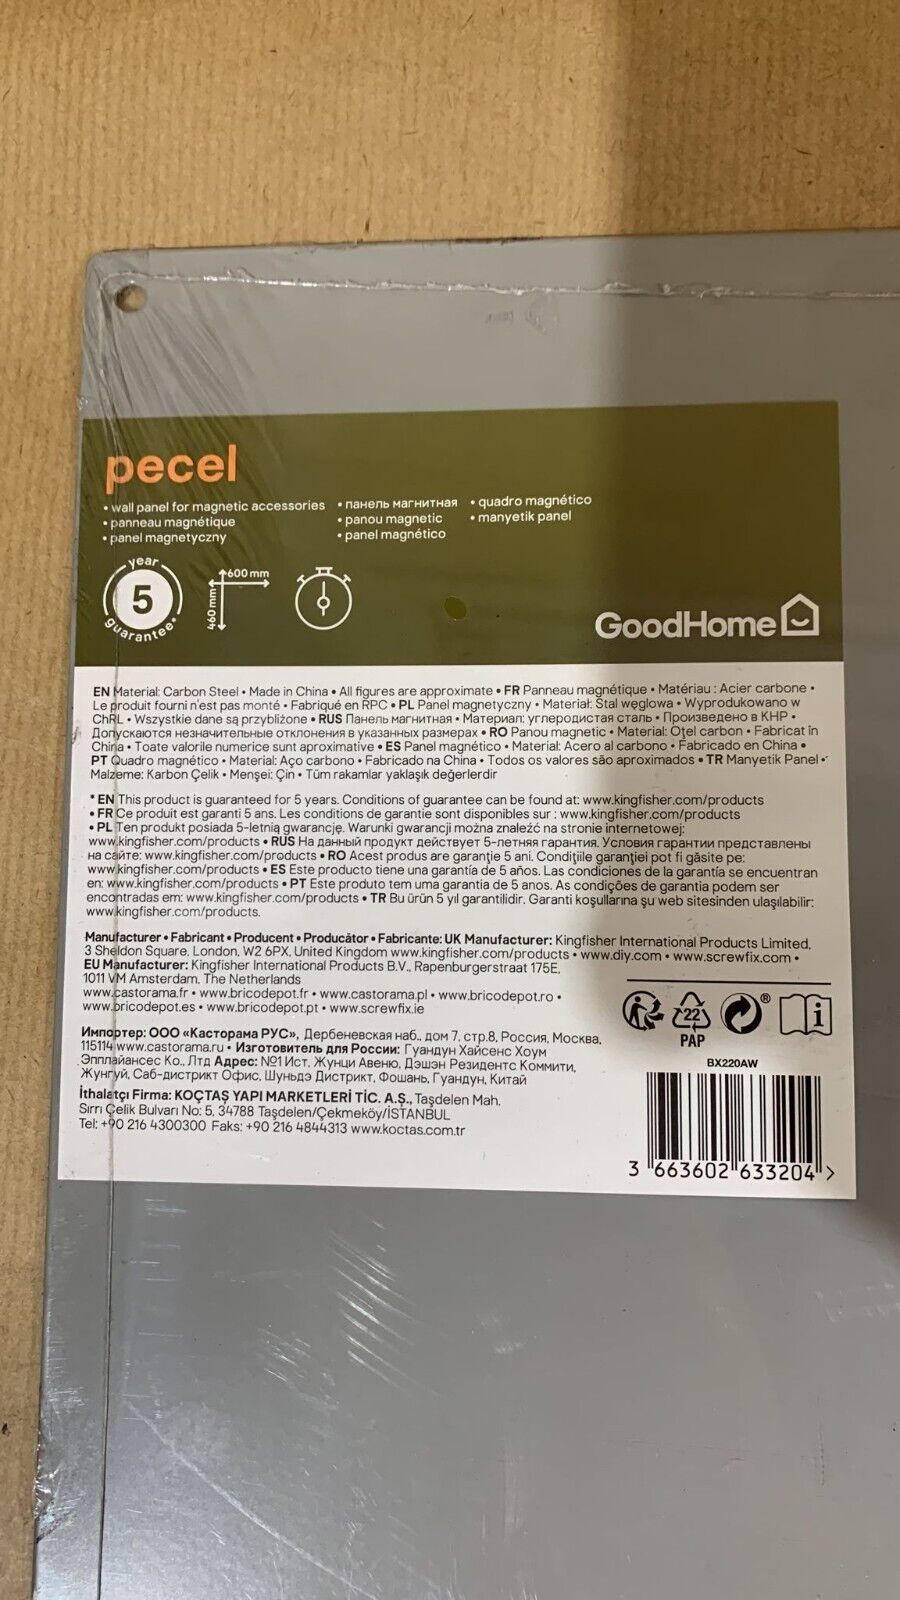 GoodHome Pecel Magnetic panel 2.15kg 3204